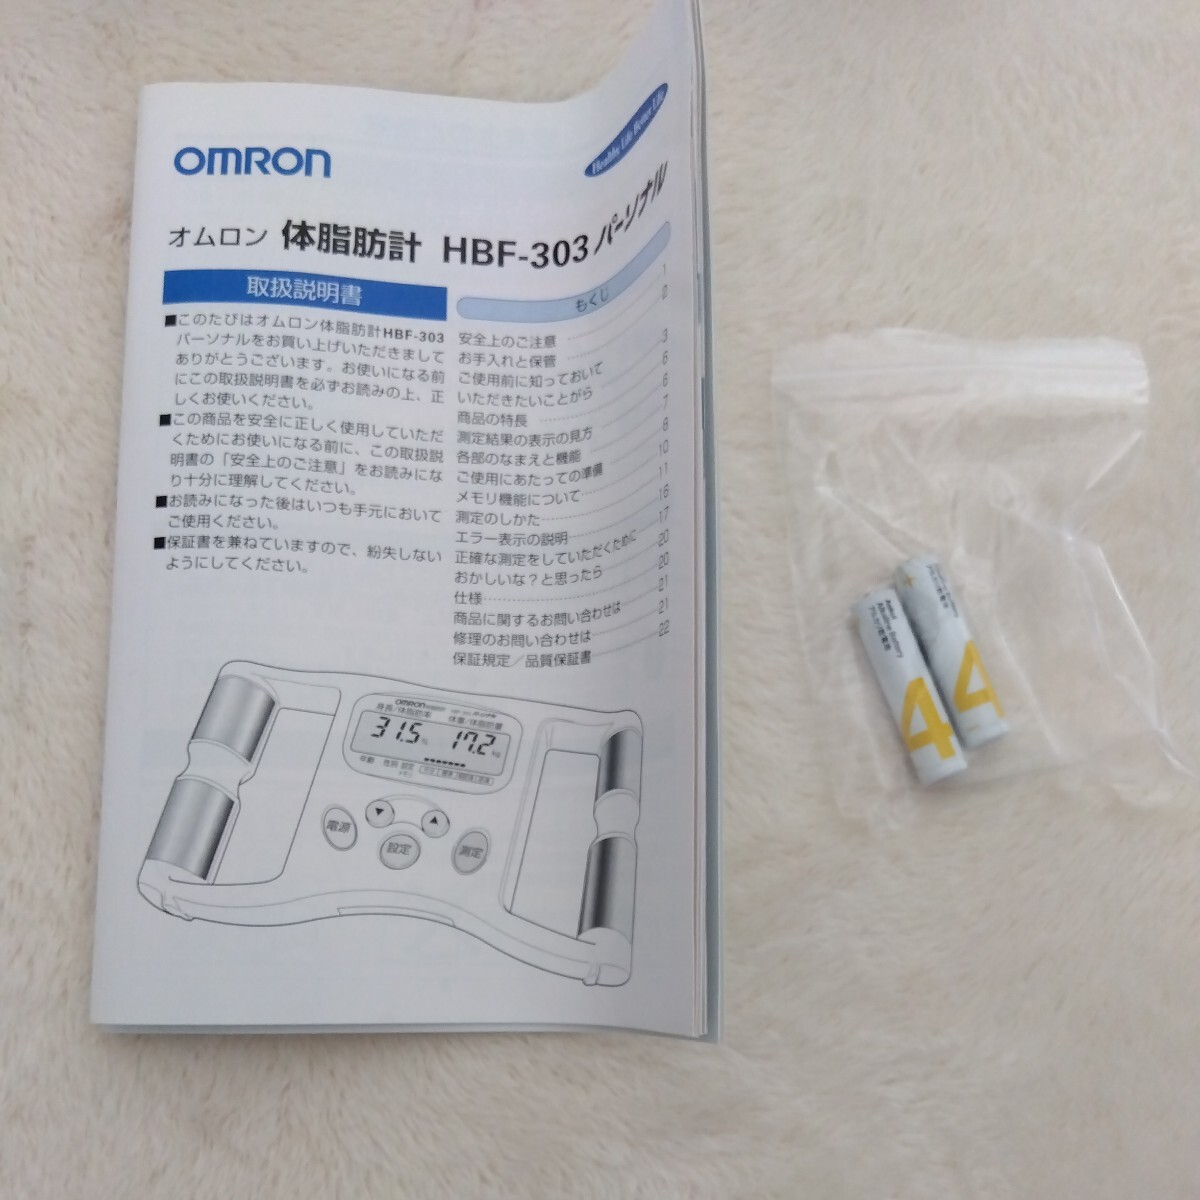  Omron body fat meter HBF-303